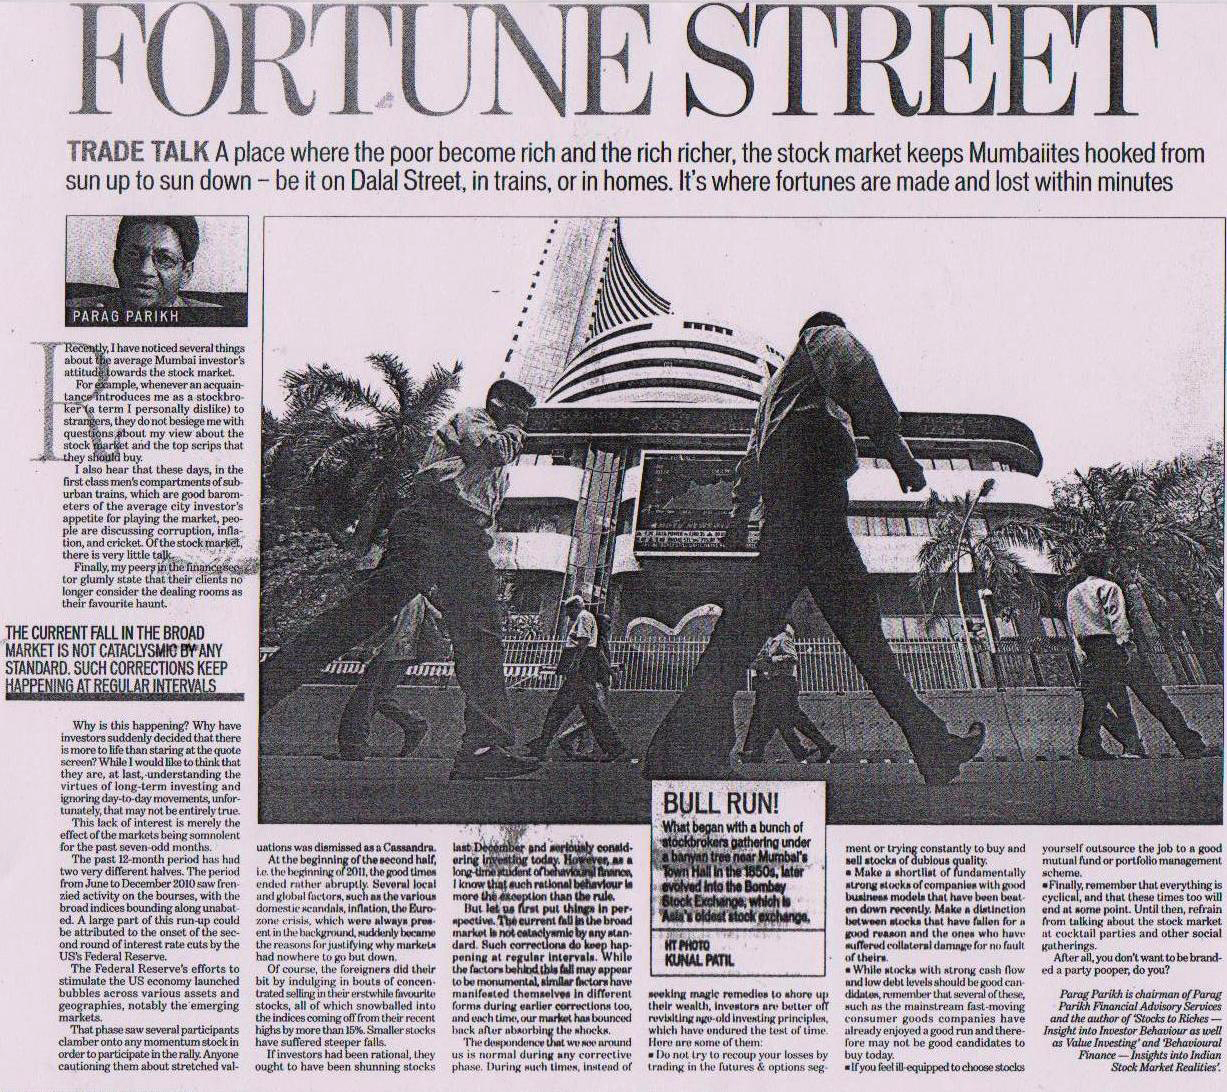 Fortune Street: Hindustan Times - Parag Parikh